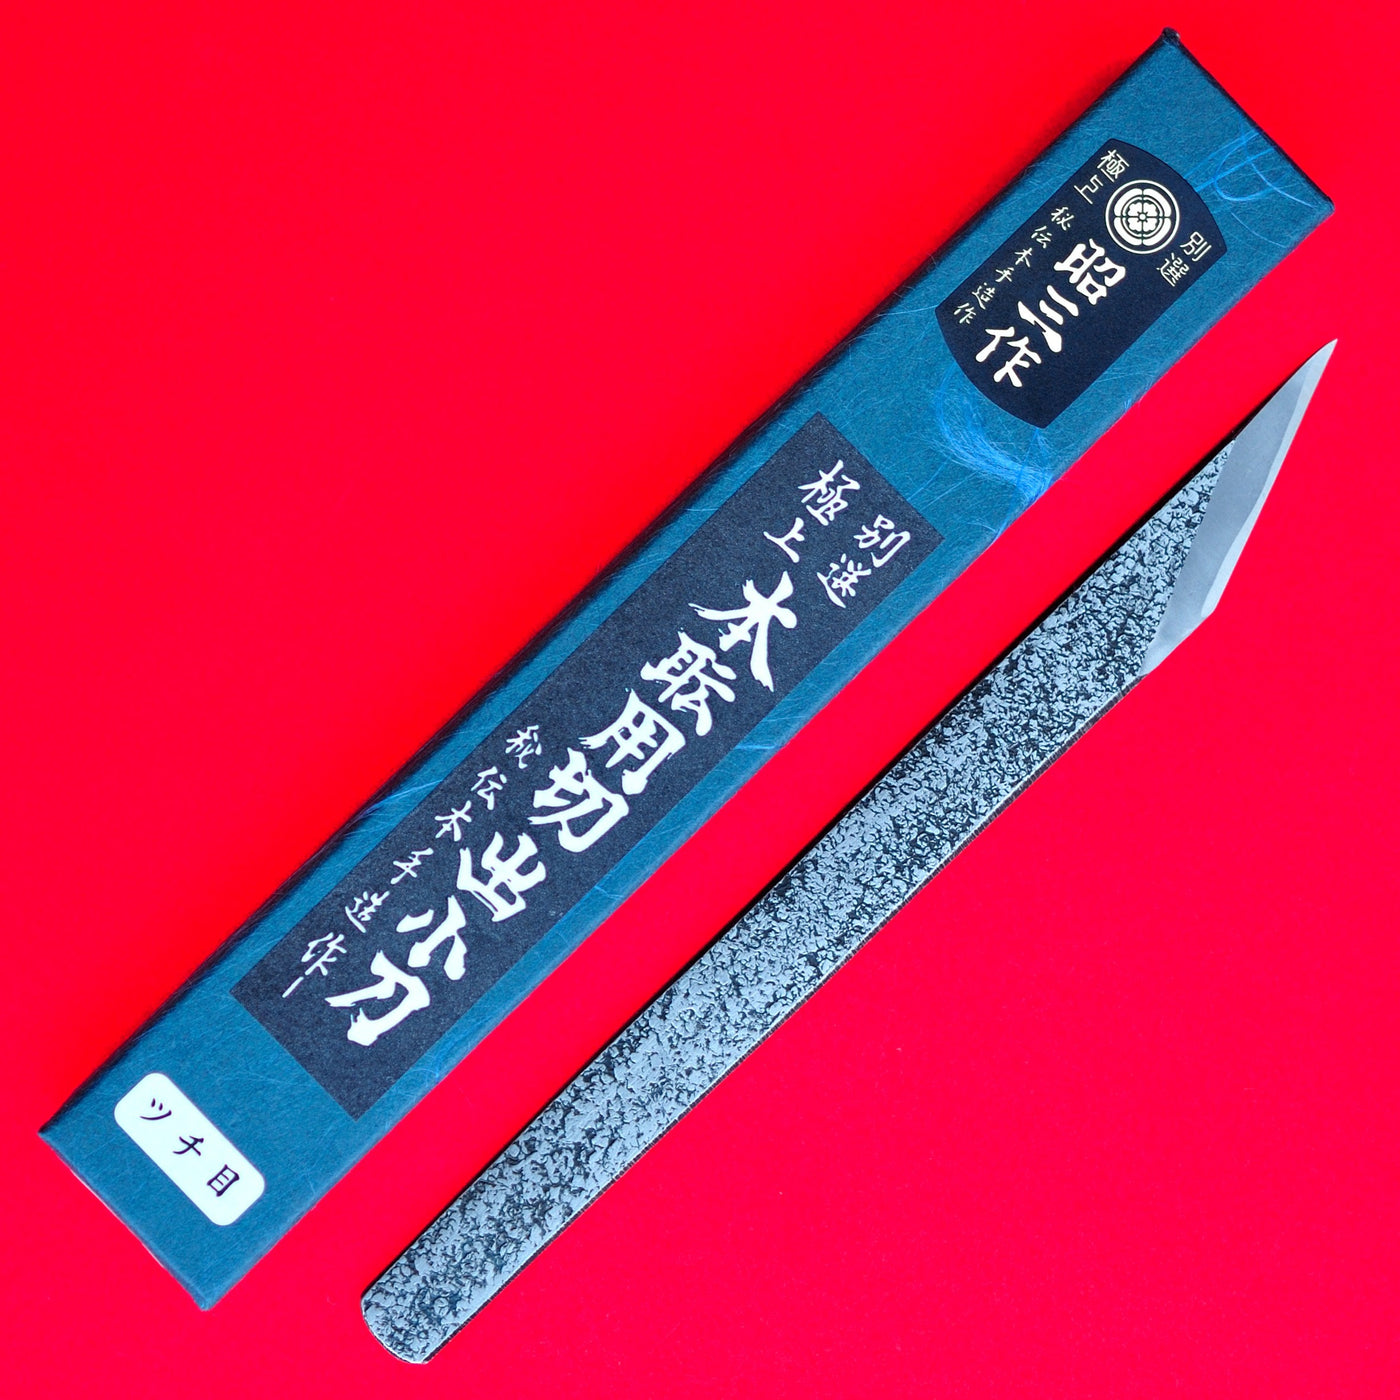 Winwo Custom Handmade Kiridashi Knife,Professional Razor Sharp Hand Forged  Japanese Stainless Steel Blade Hammered Pattern for Woodworking, Marking